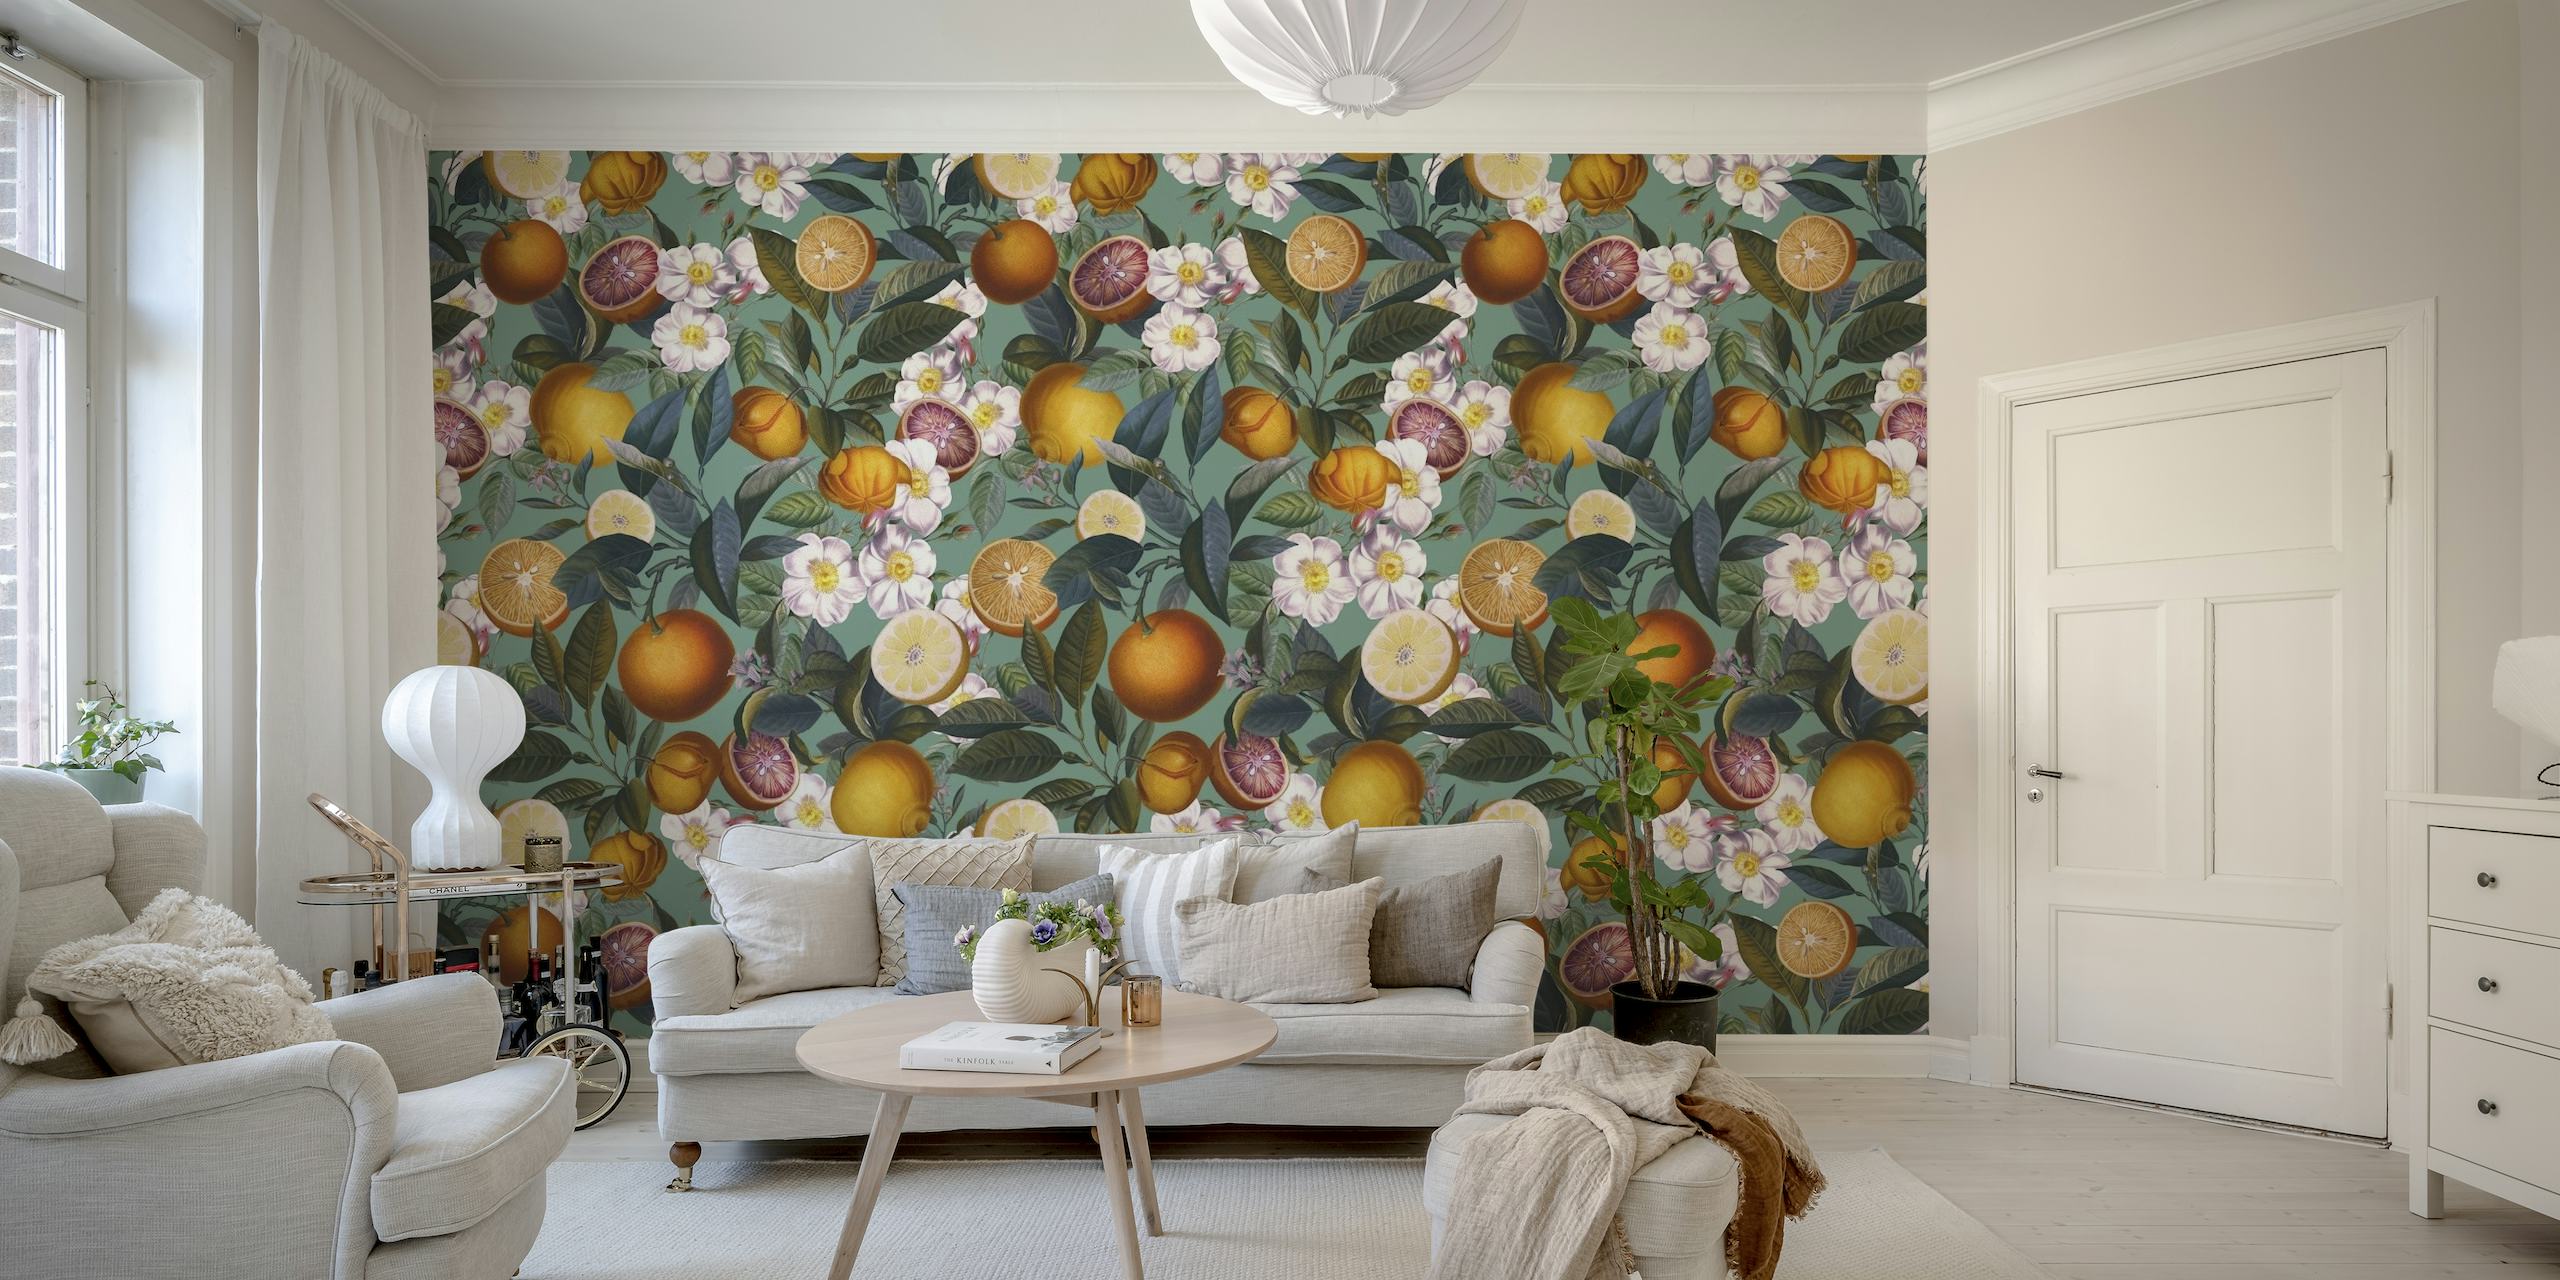 Juicy Lemons wallpaper